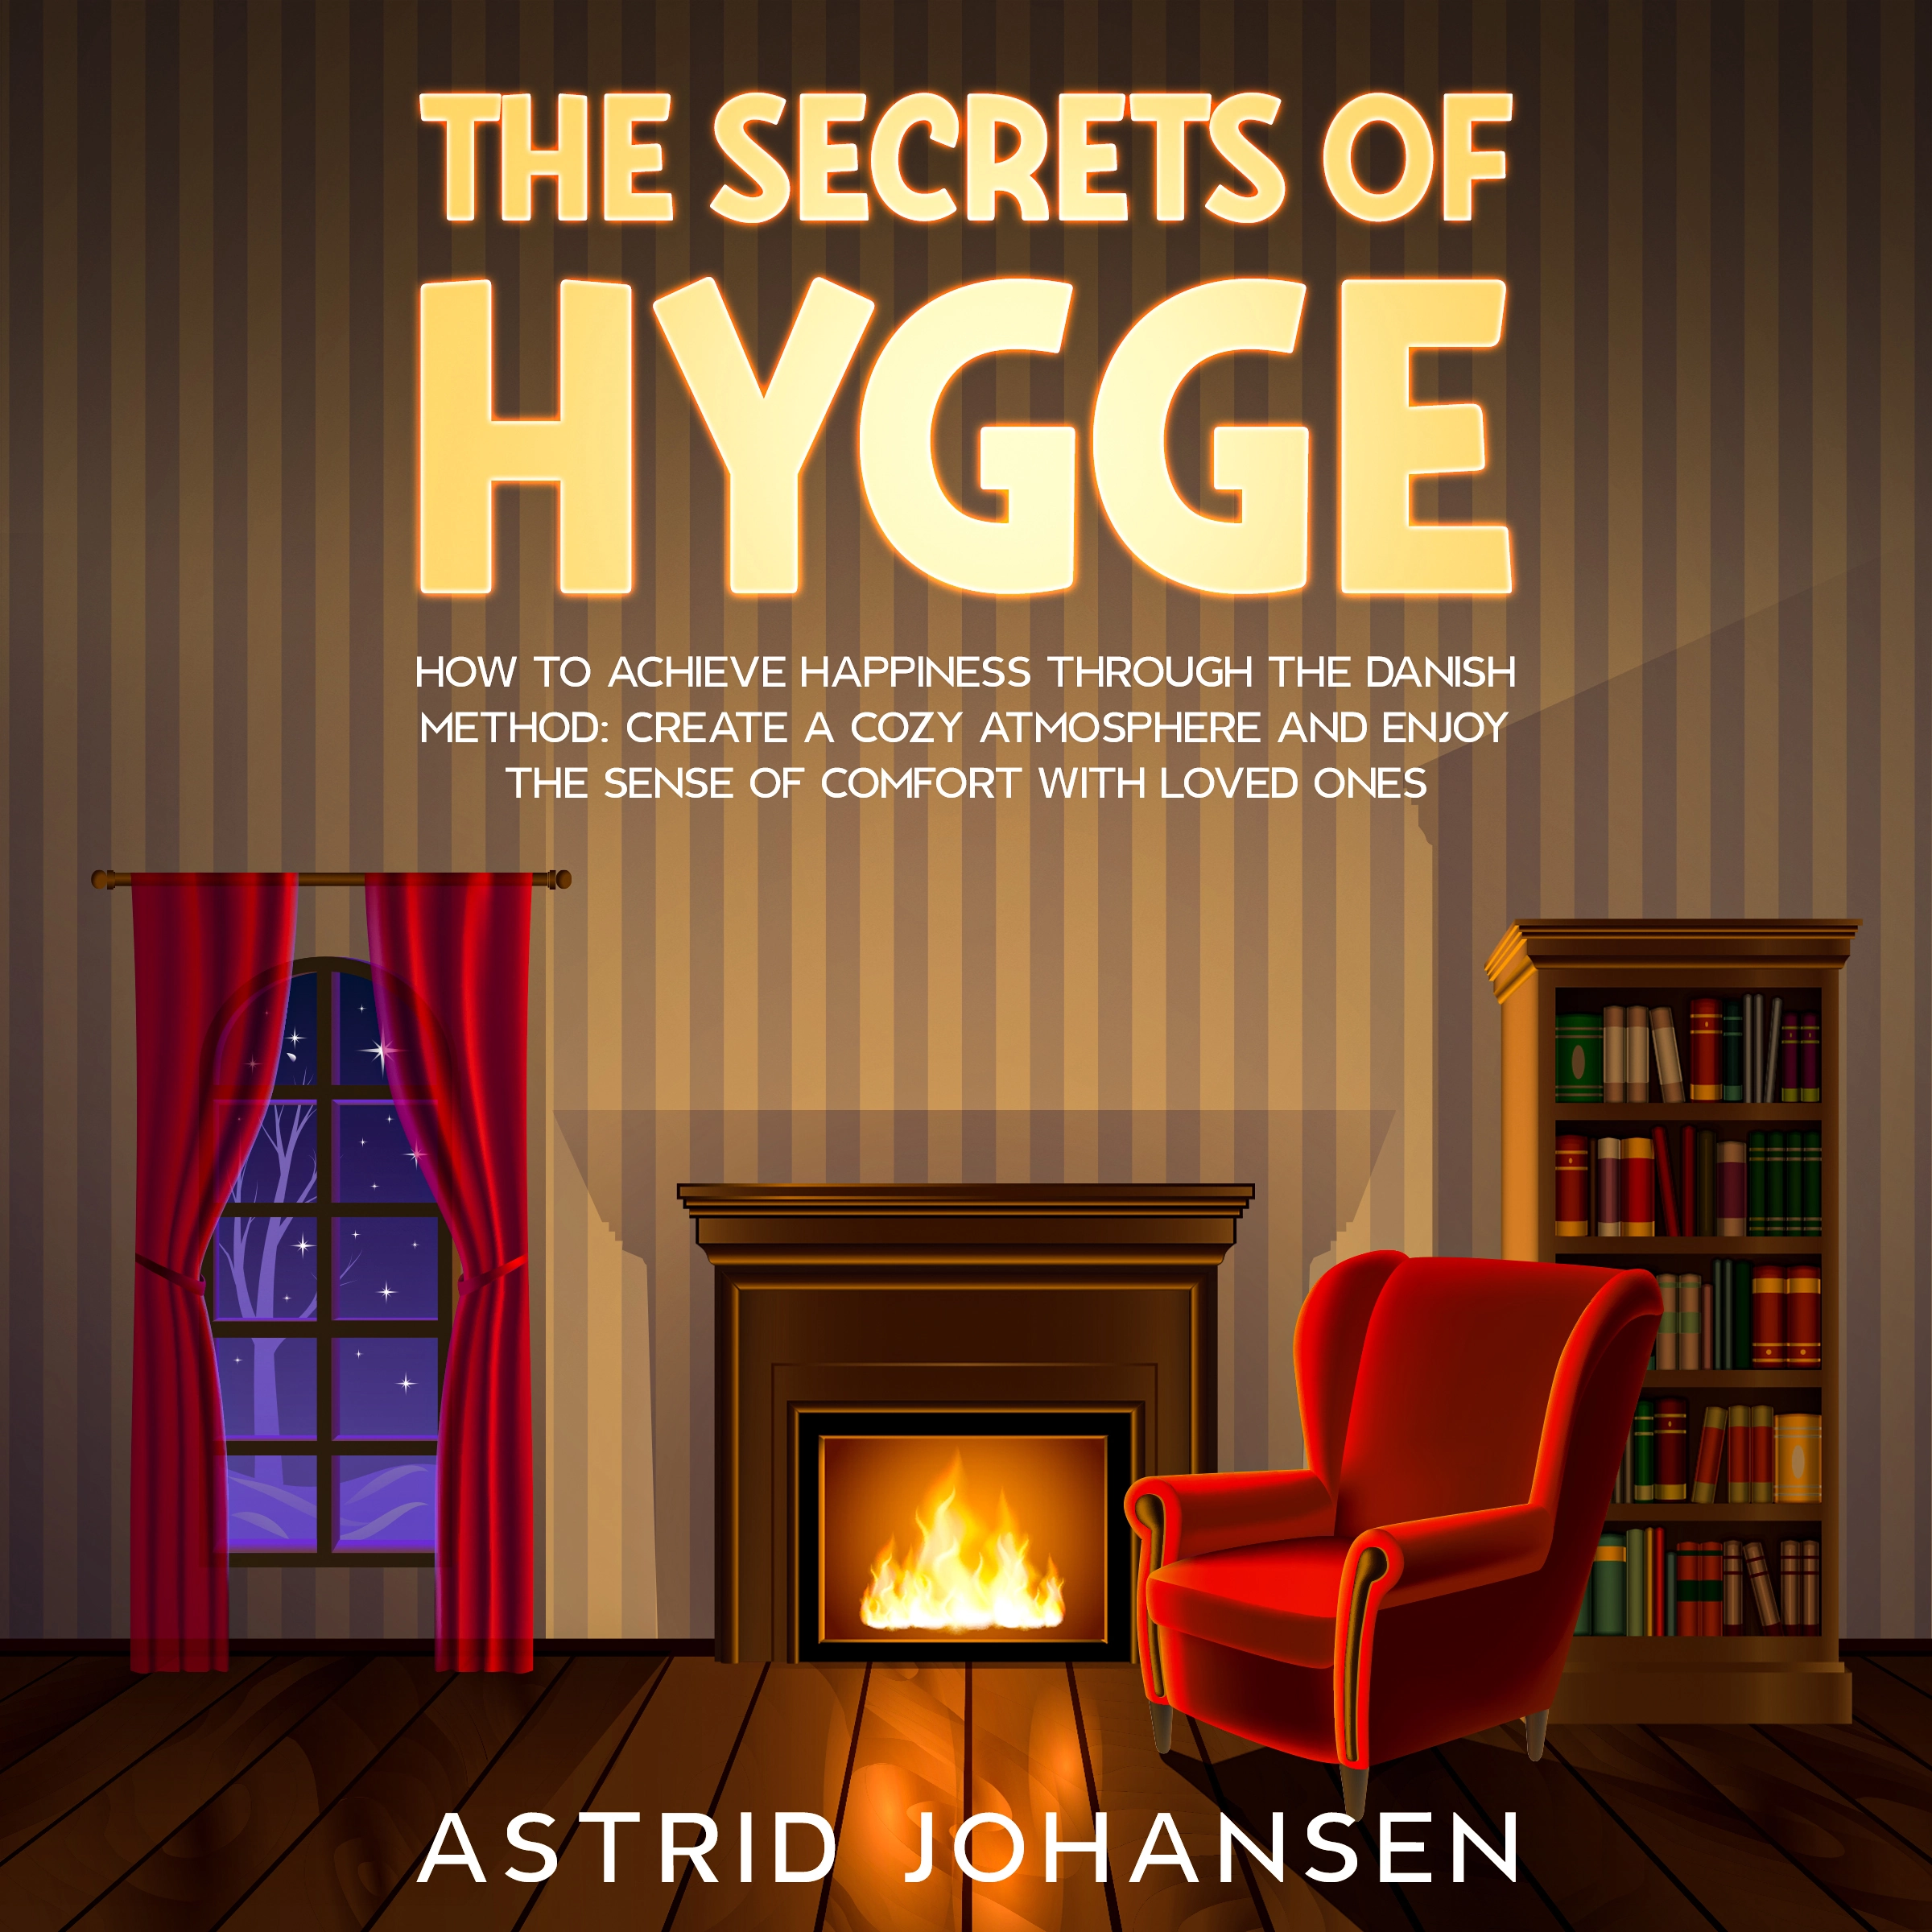 The Secrets of Hygge Audiobook by Astrid Johansen